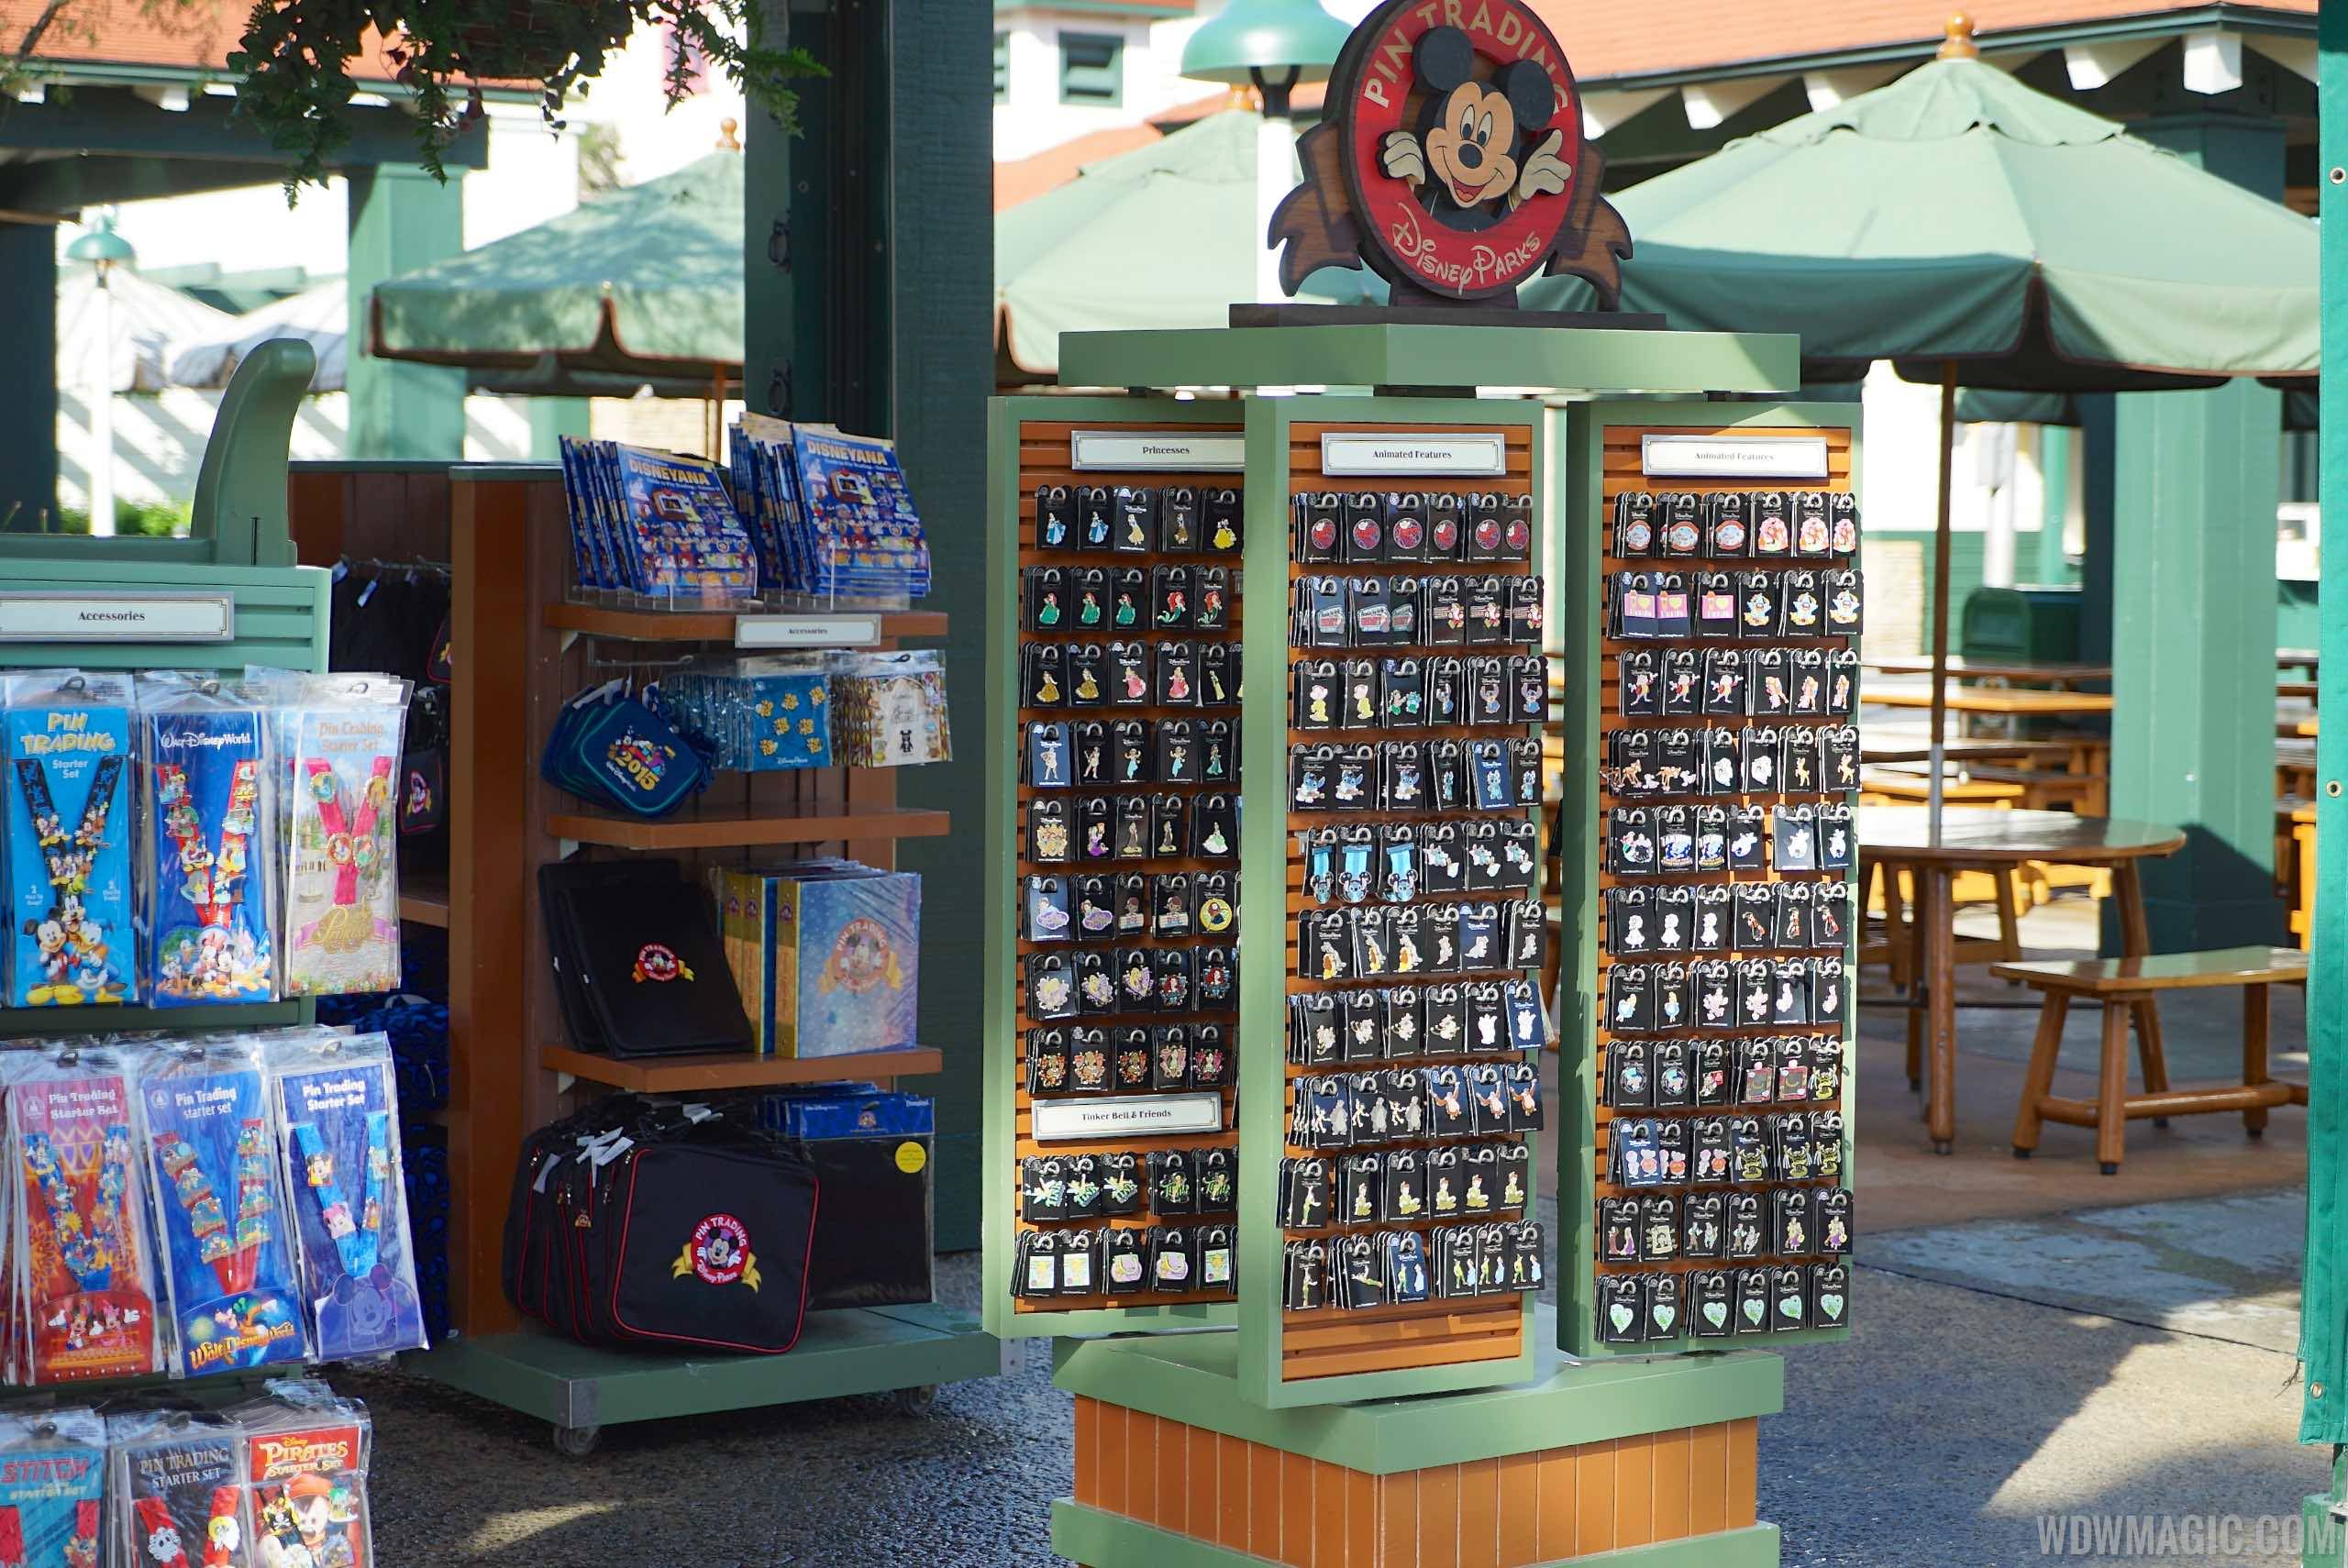 PHOTOS - Sunset Ranch Pins and Souvenirs opens at Disney's Hollywood Studios